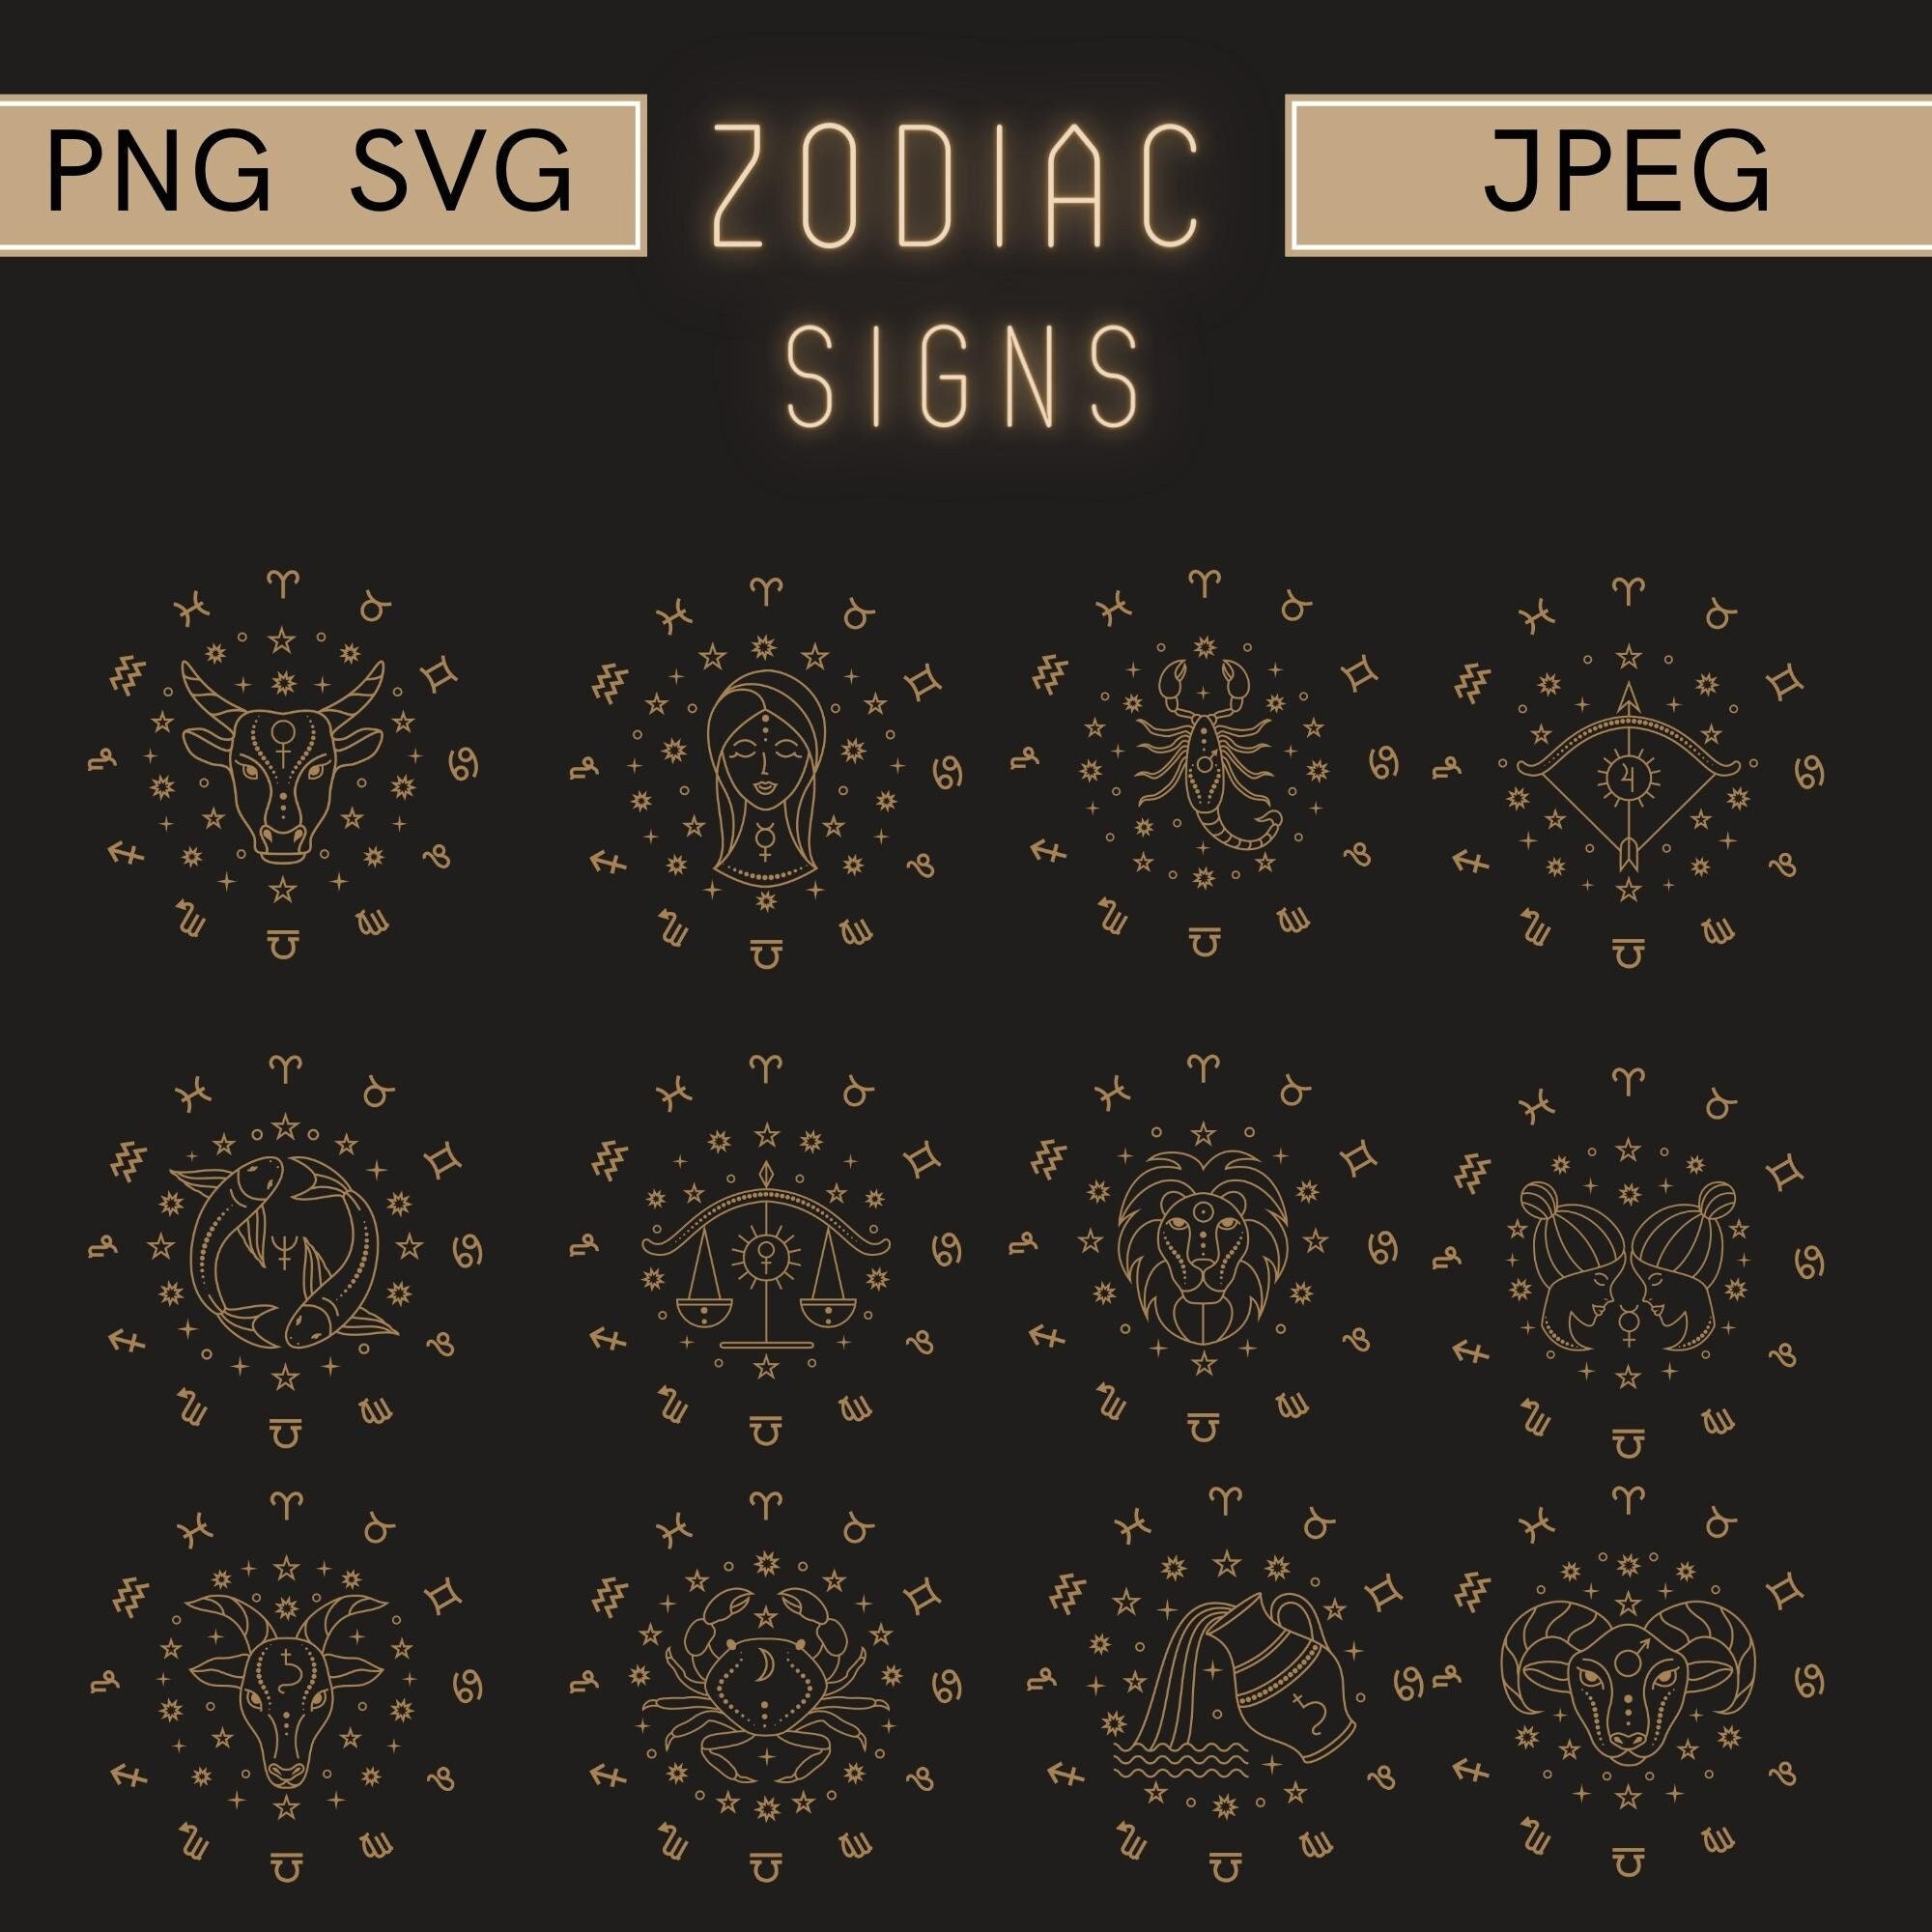 Gold Digger - Zodiac